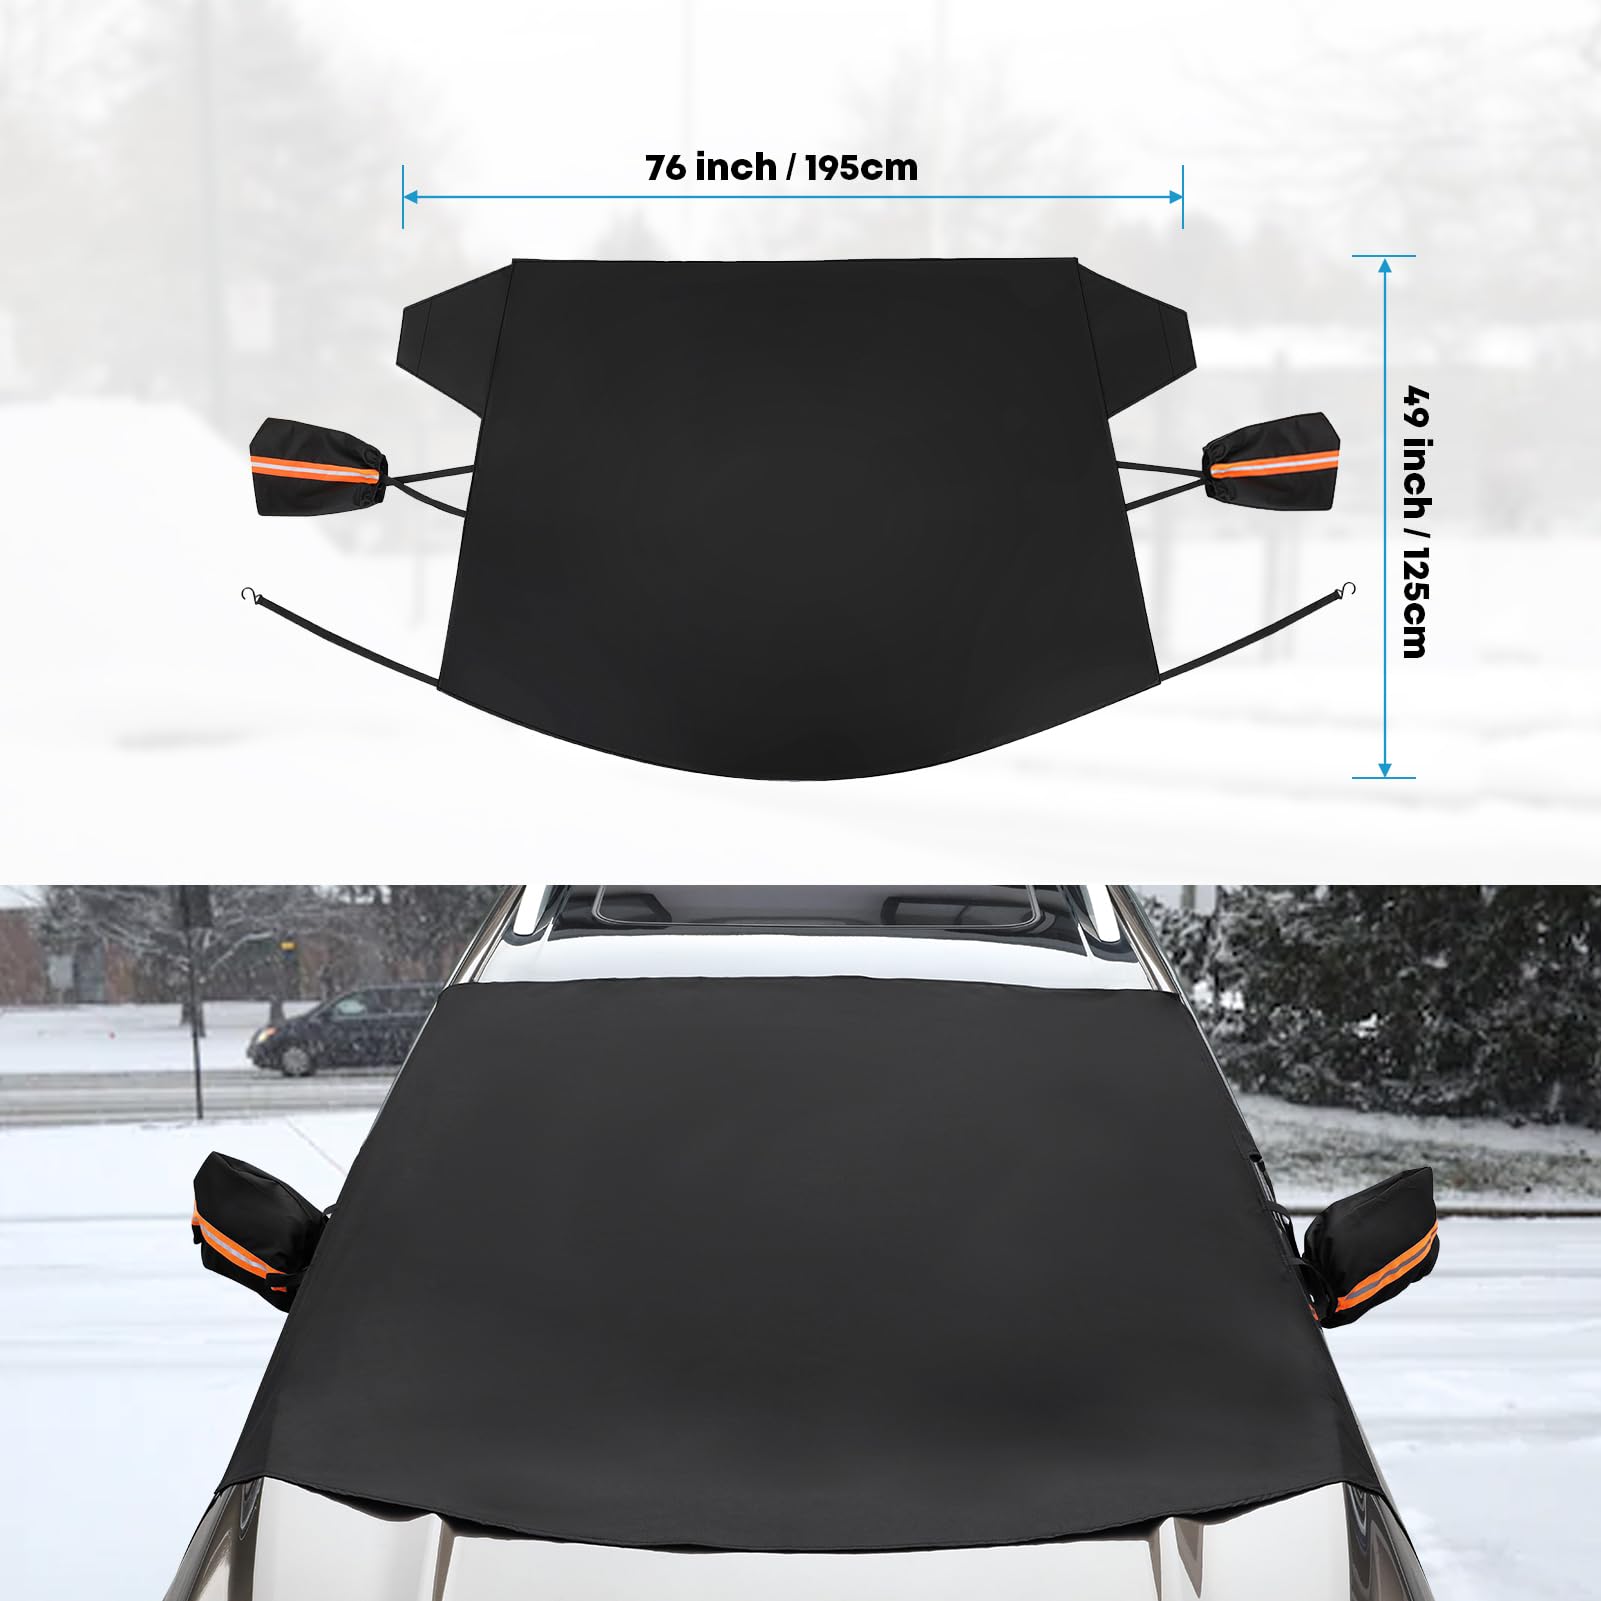 Kohree Upgraded Car Windshield Snow Ice Cover